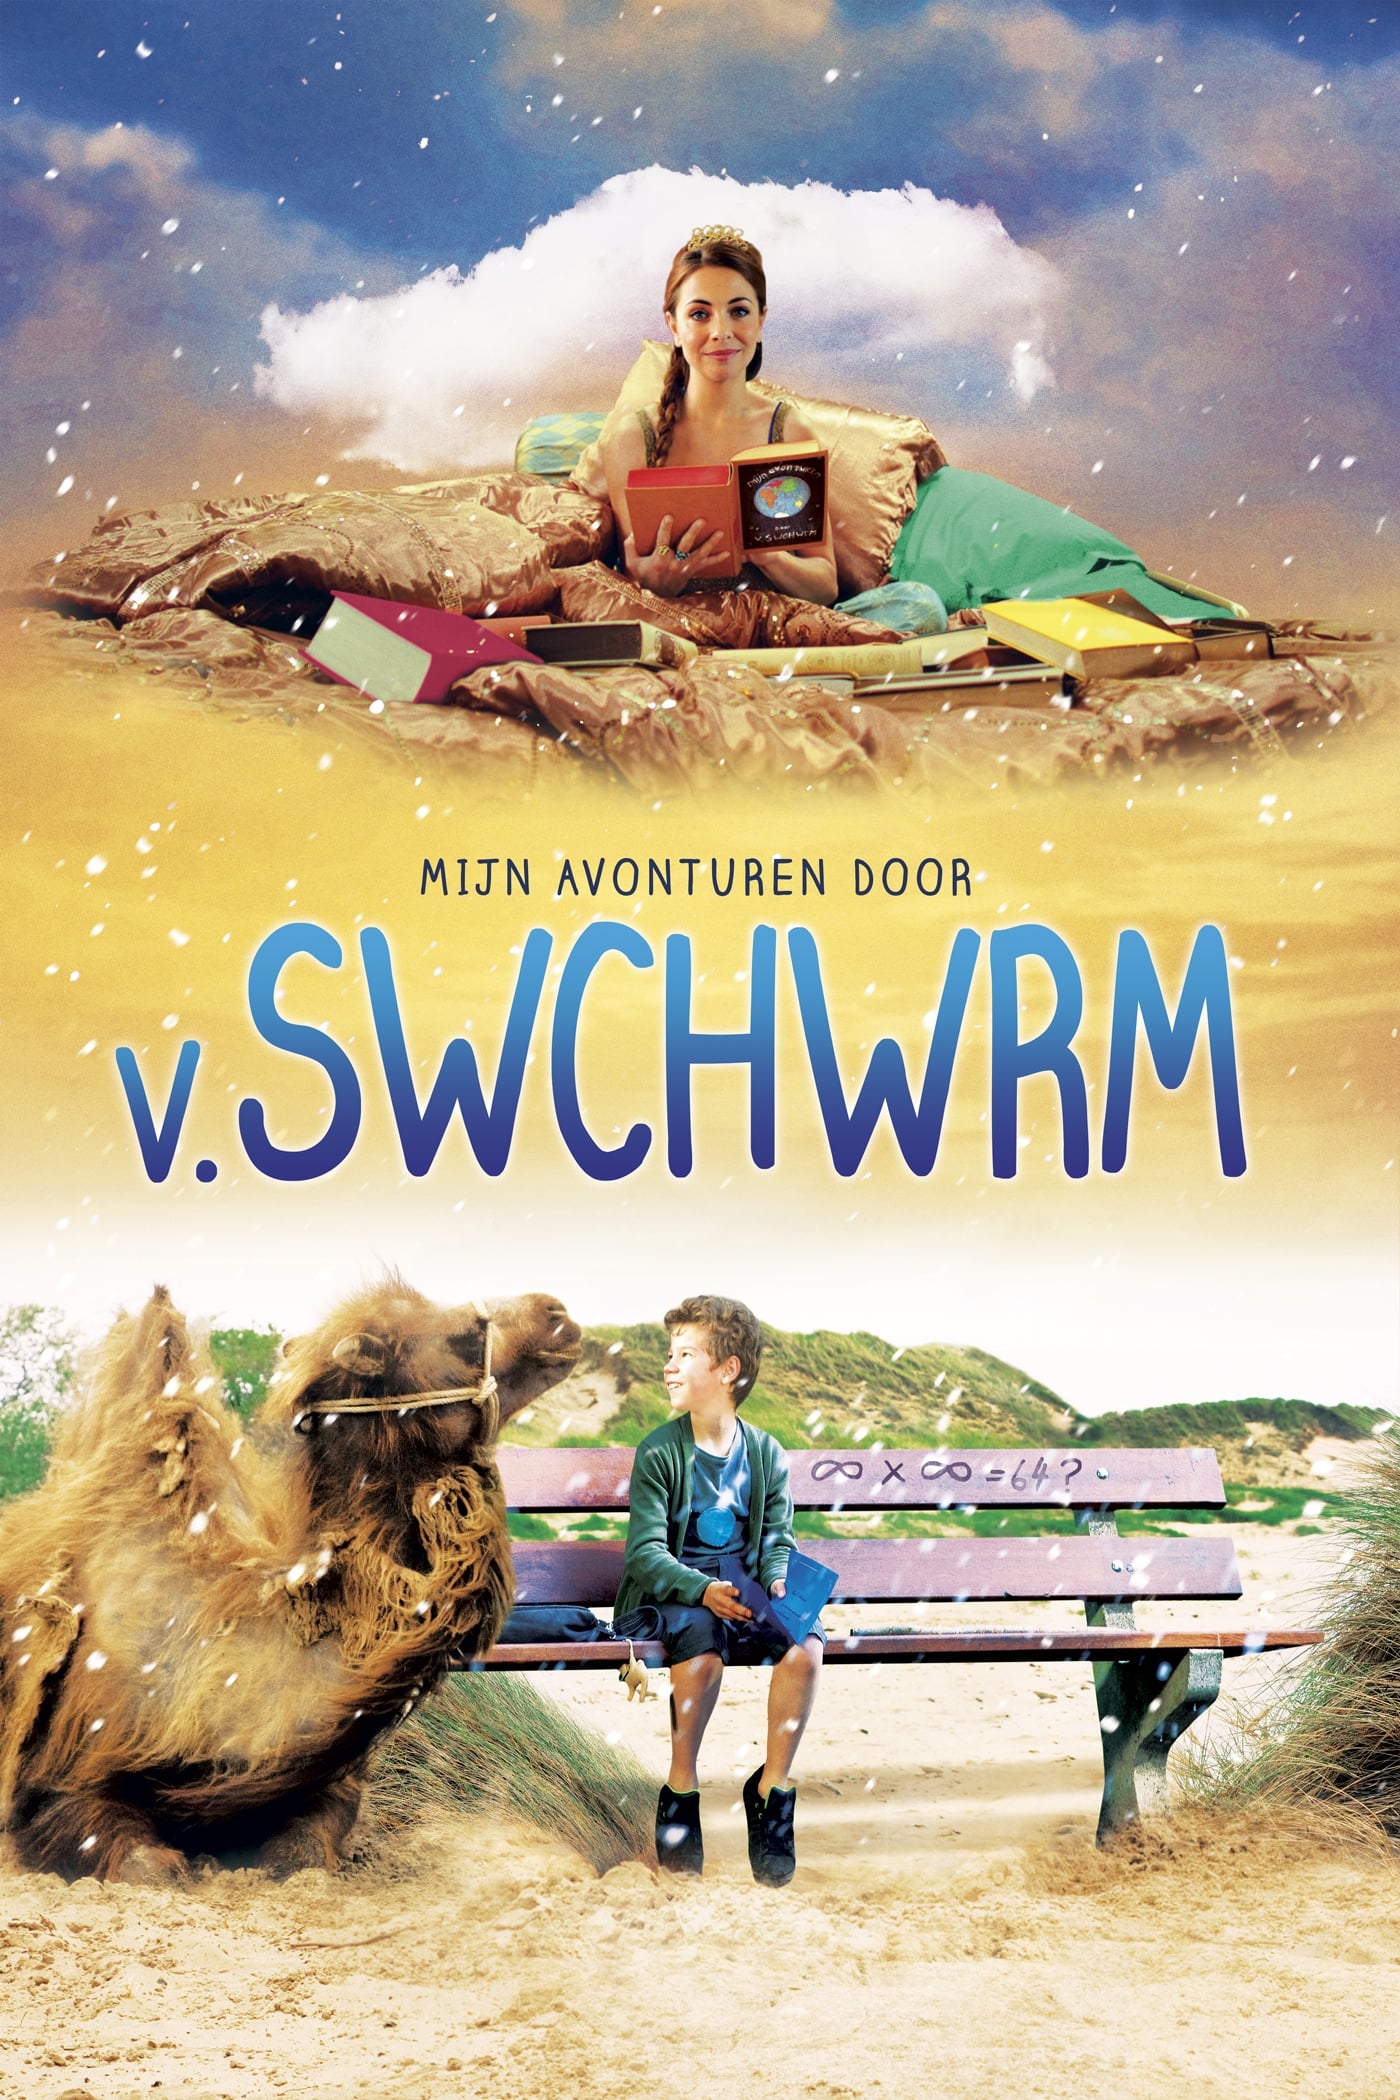 My Adventures by V. Swchwrm